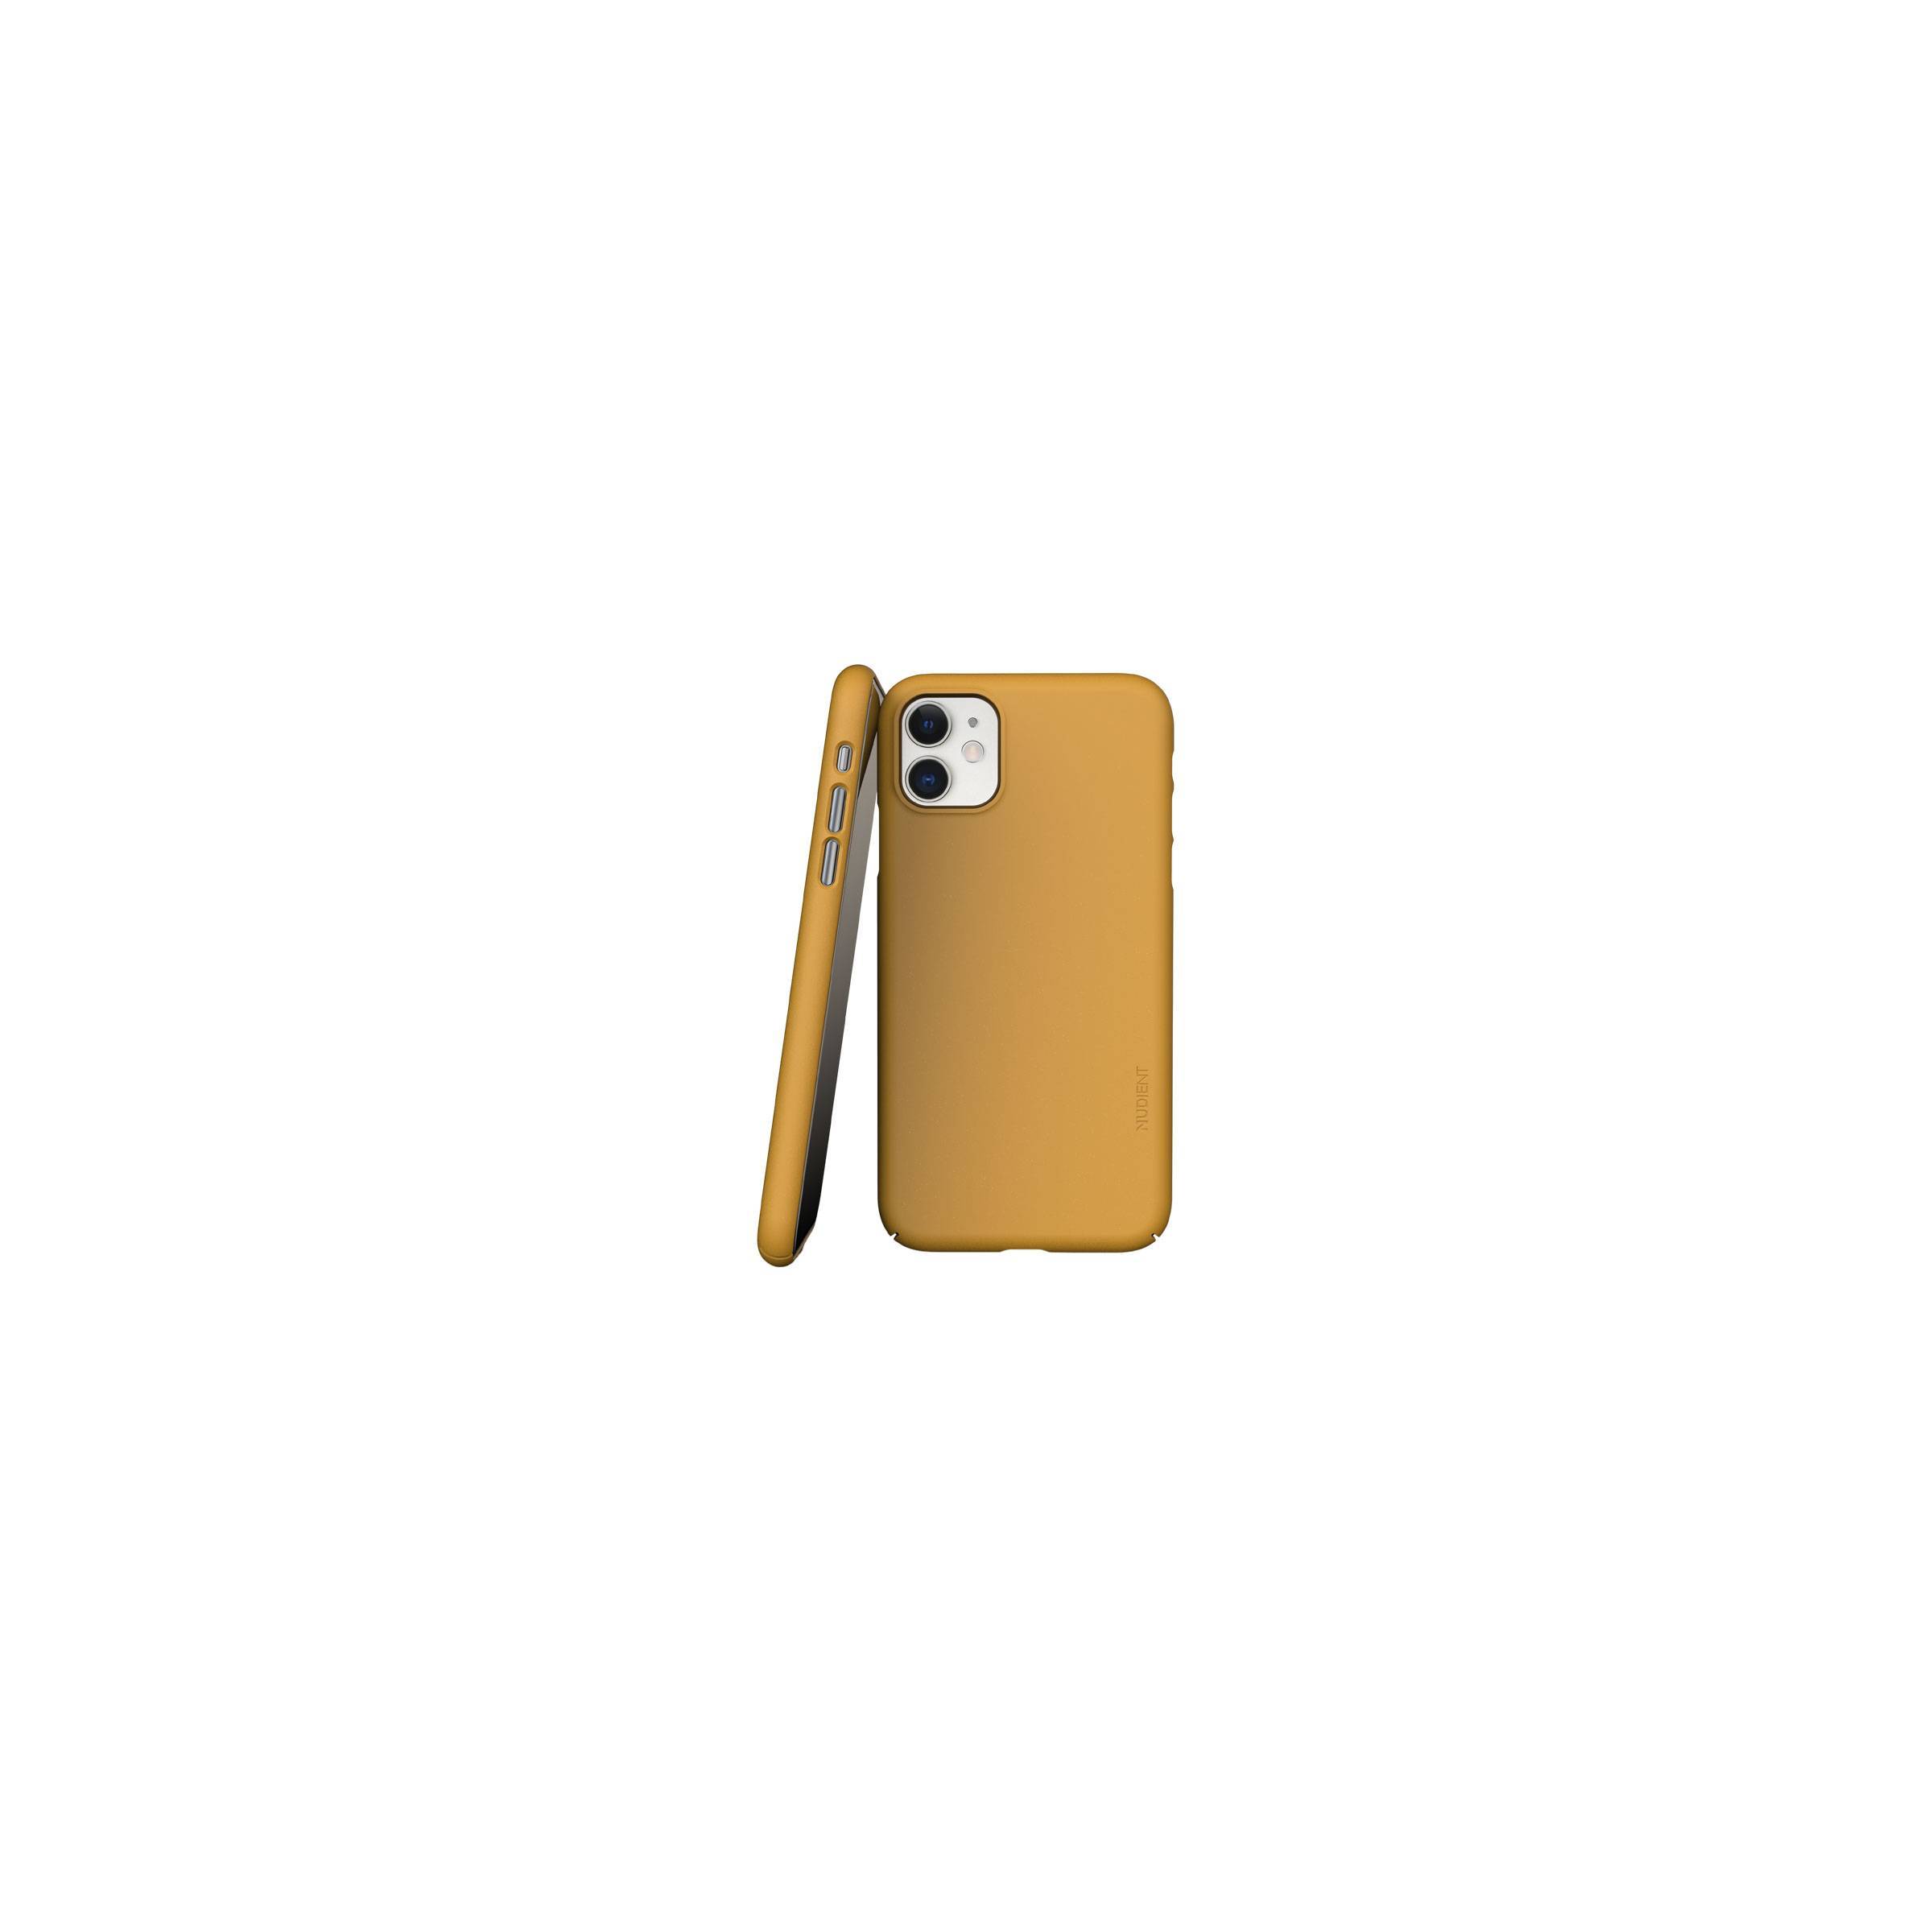 Bilde av Nudient Thin Precise V3 Iphone 11 Cover, Saffron Yellow